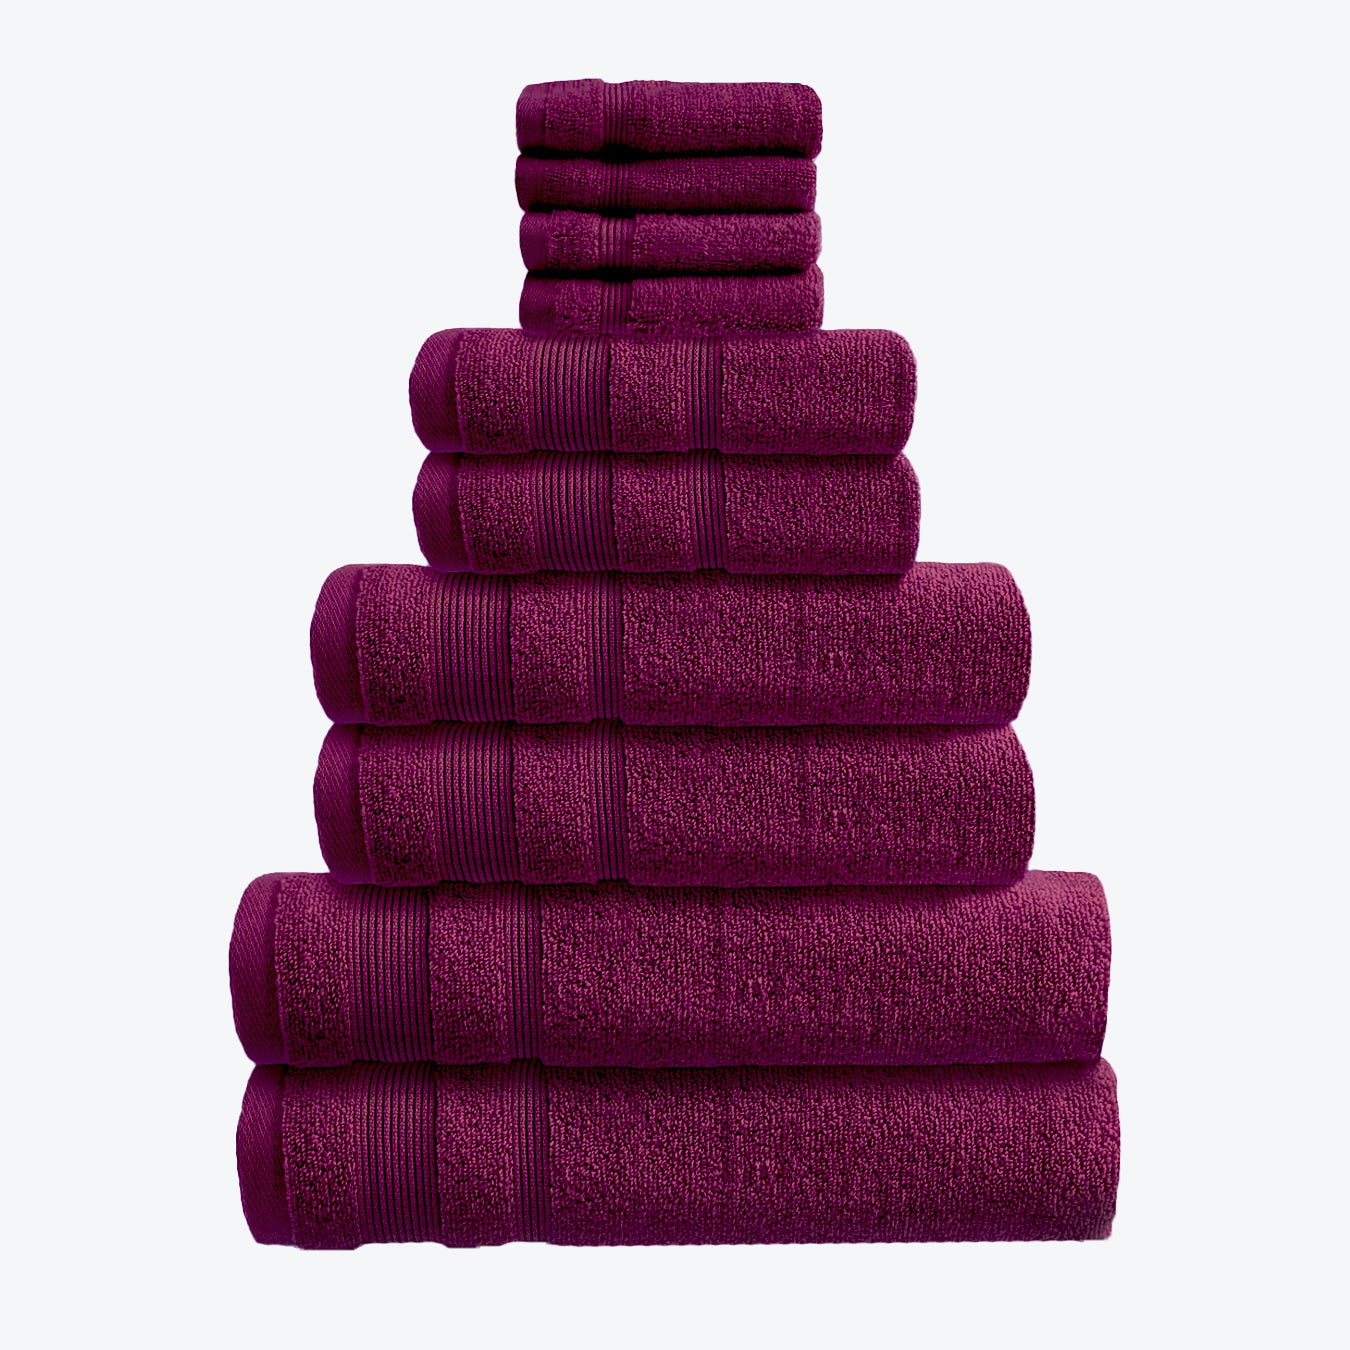 Beetroot Purple Zero Twist 10pc Towel Set Egyptian Cotton Bathroom Towel Bale. Hand Towels, Bath Towels, Bath Sheets, and Face Cloths